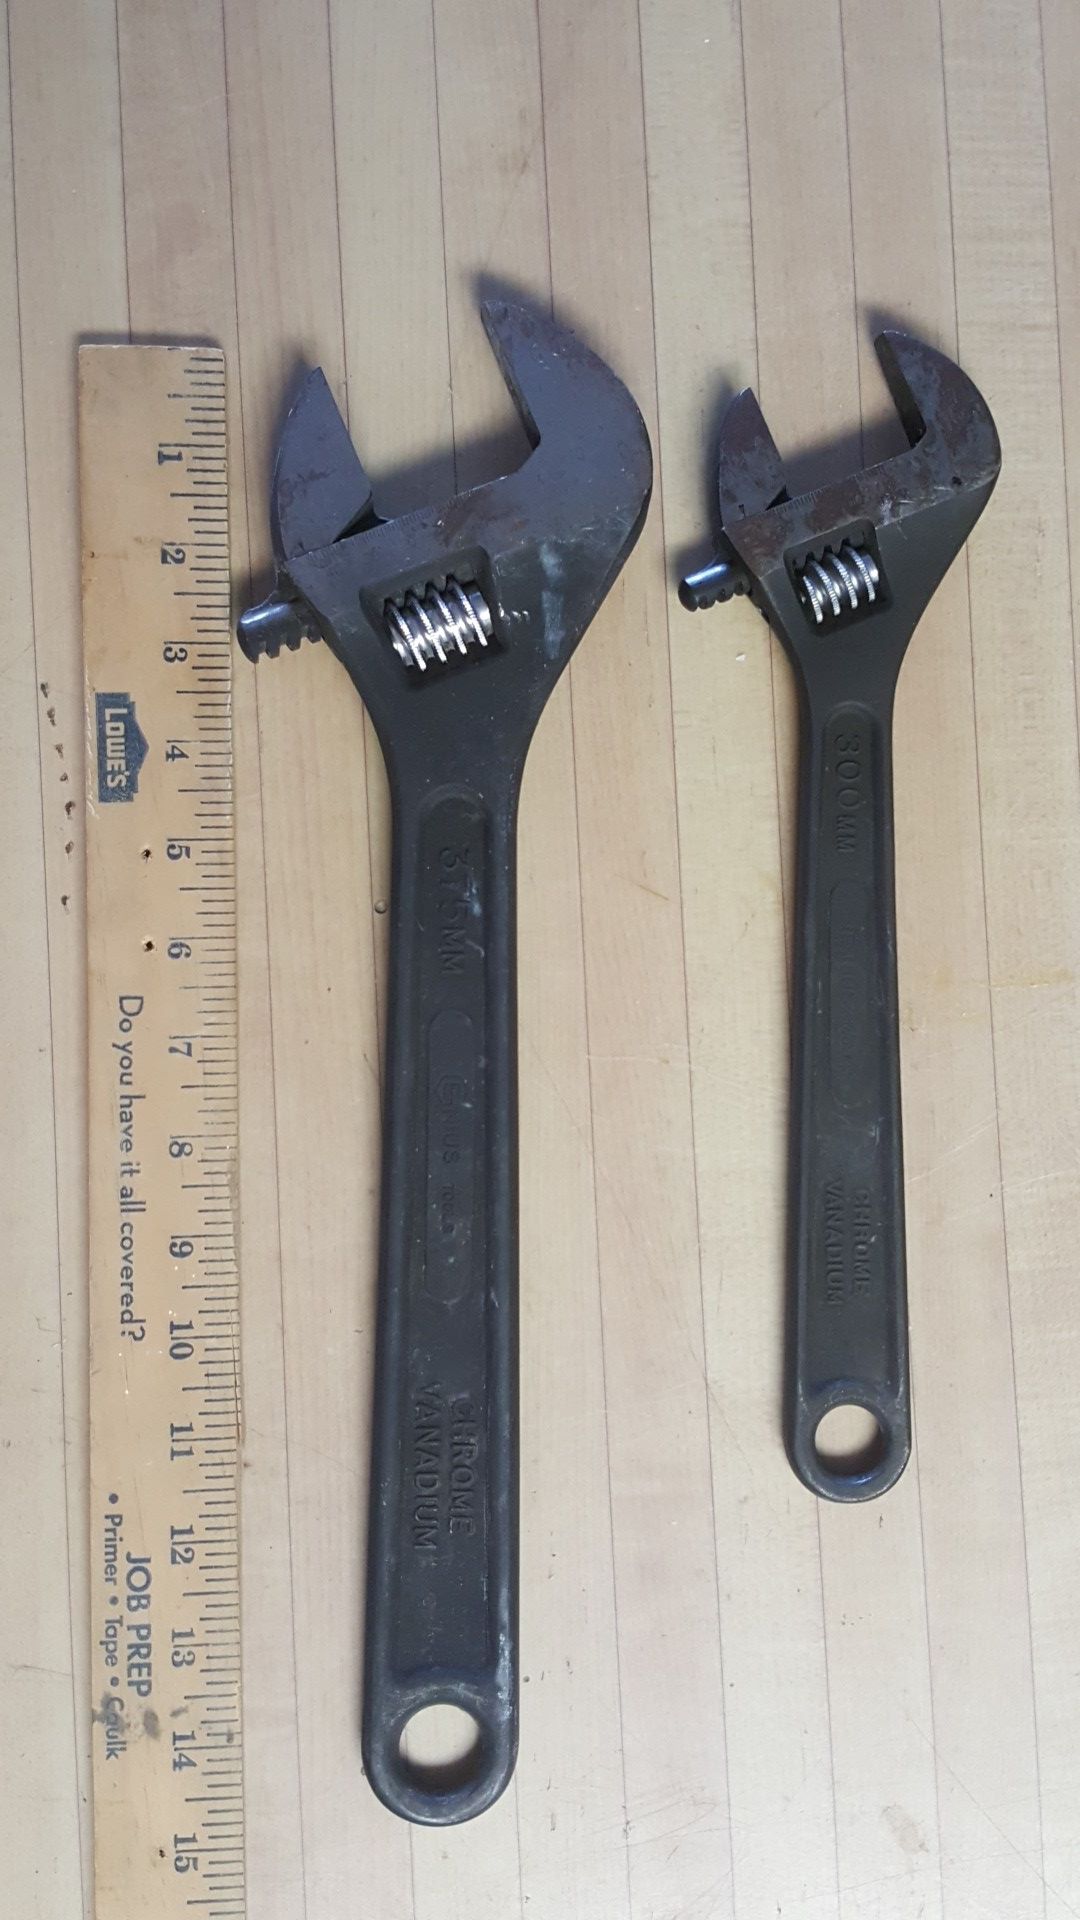 Genius adjustable wrenchs